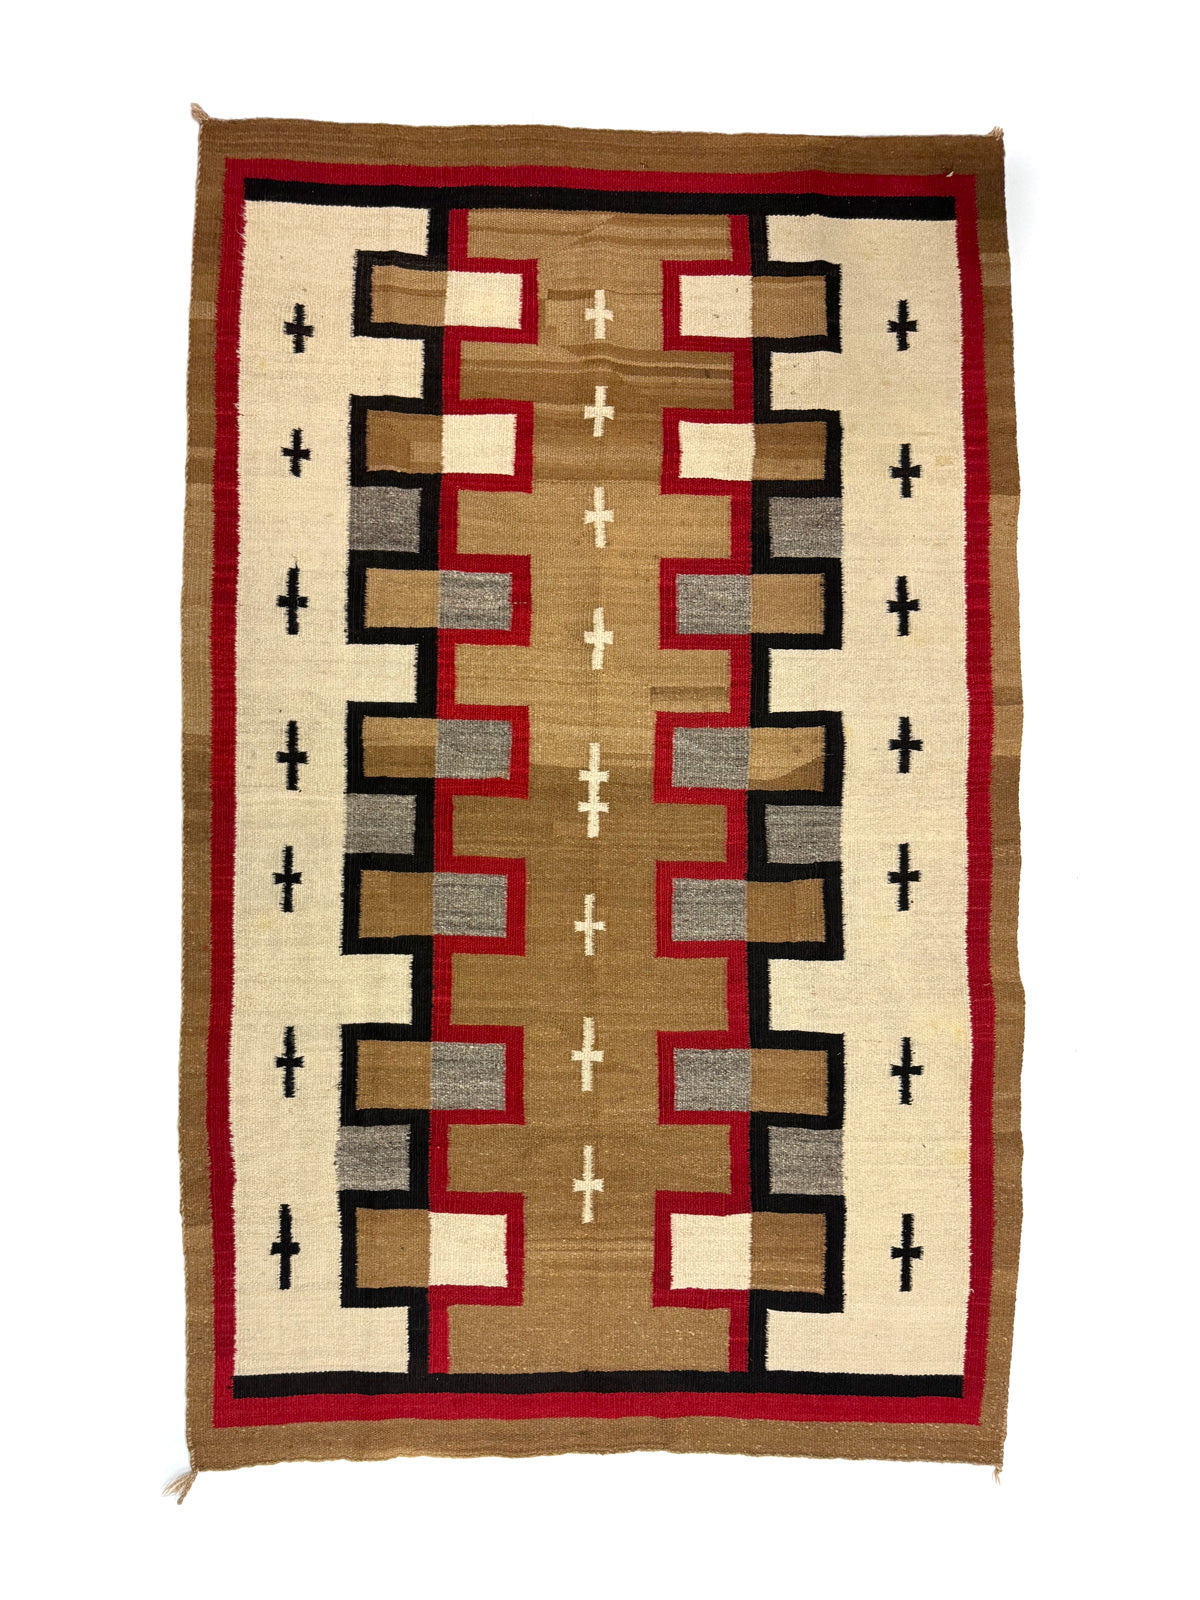 Navajo Crystal Rug with Cross Design c. 1910-20s, 77" x 51" (T92253-1123-005)